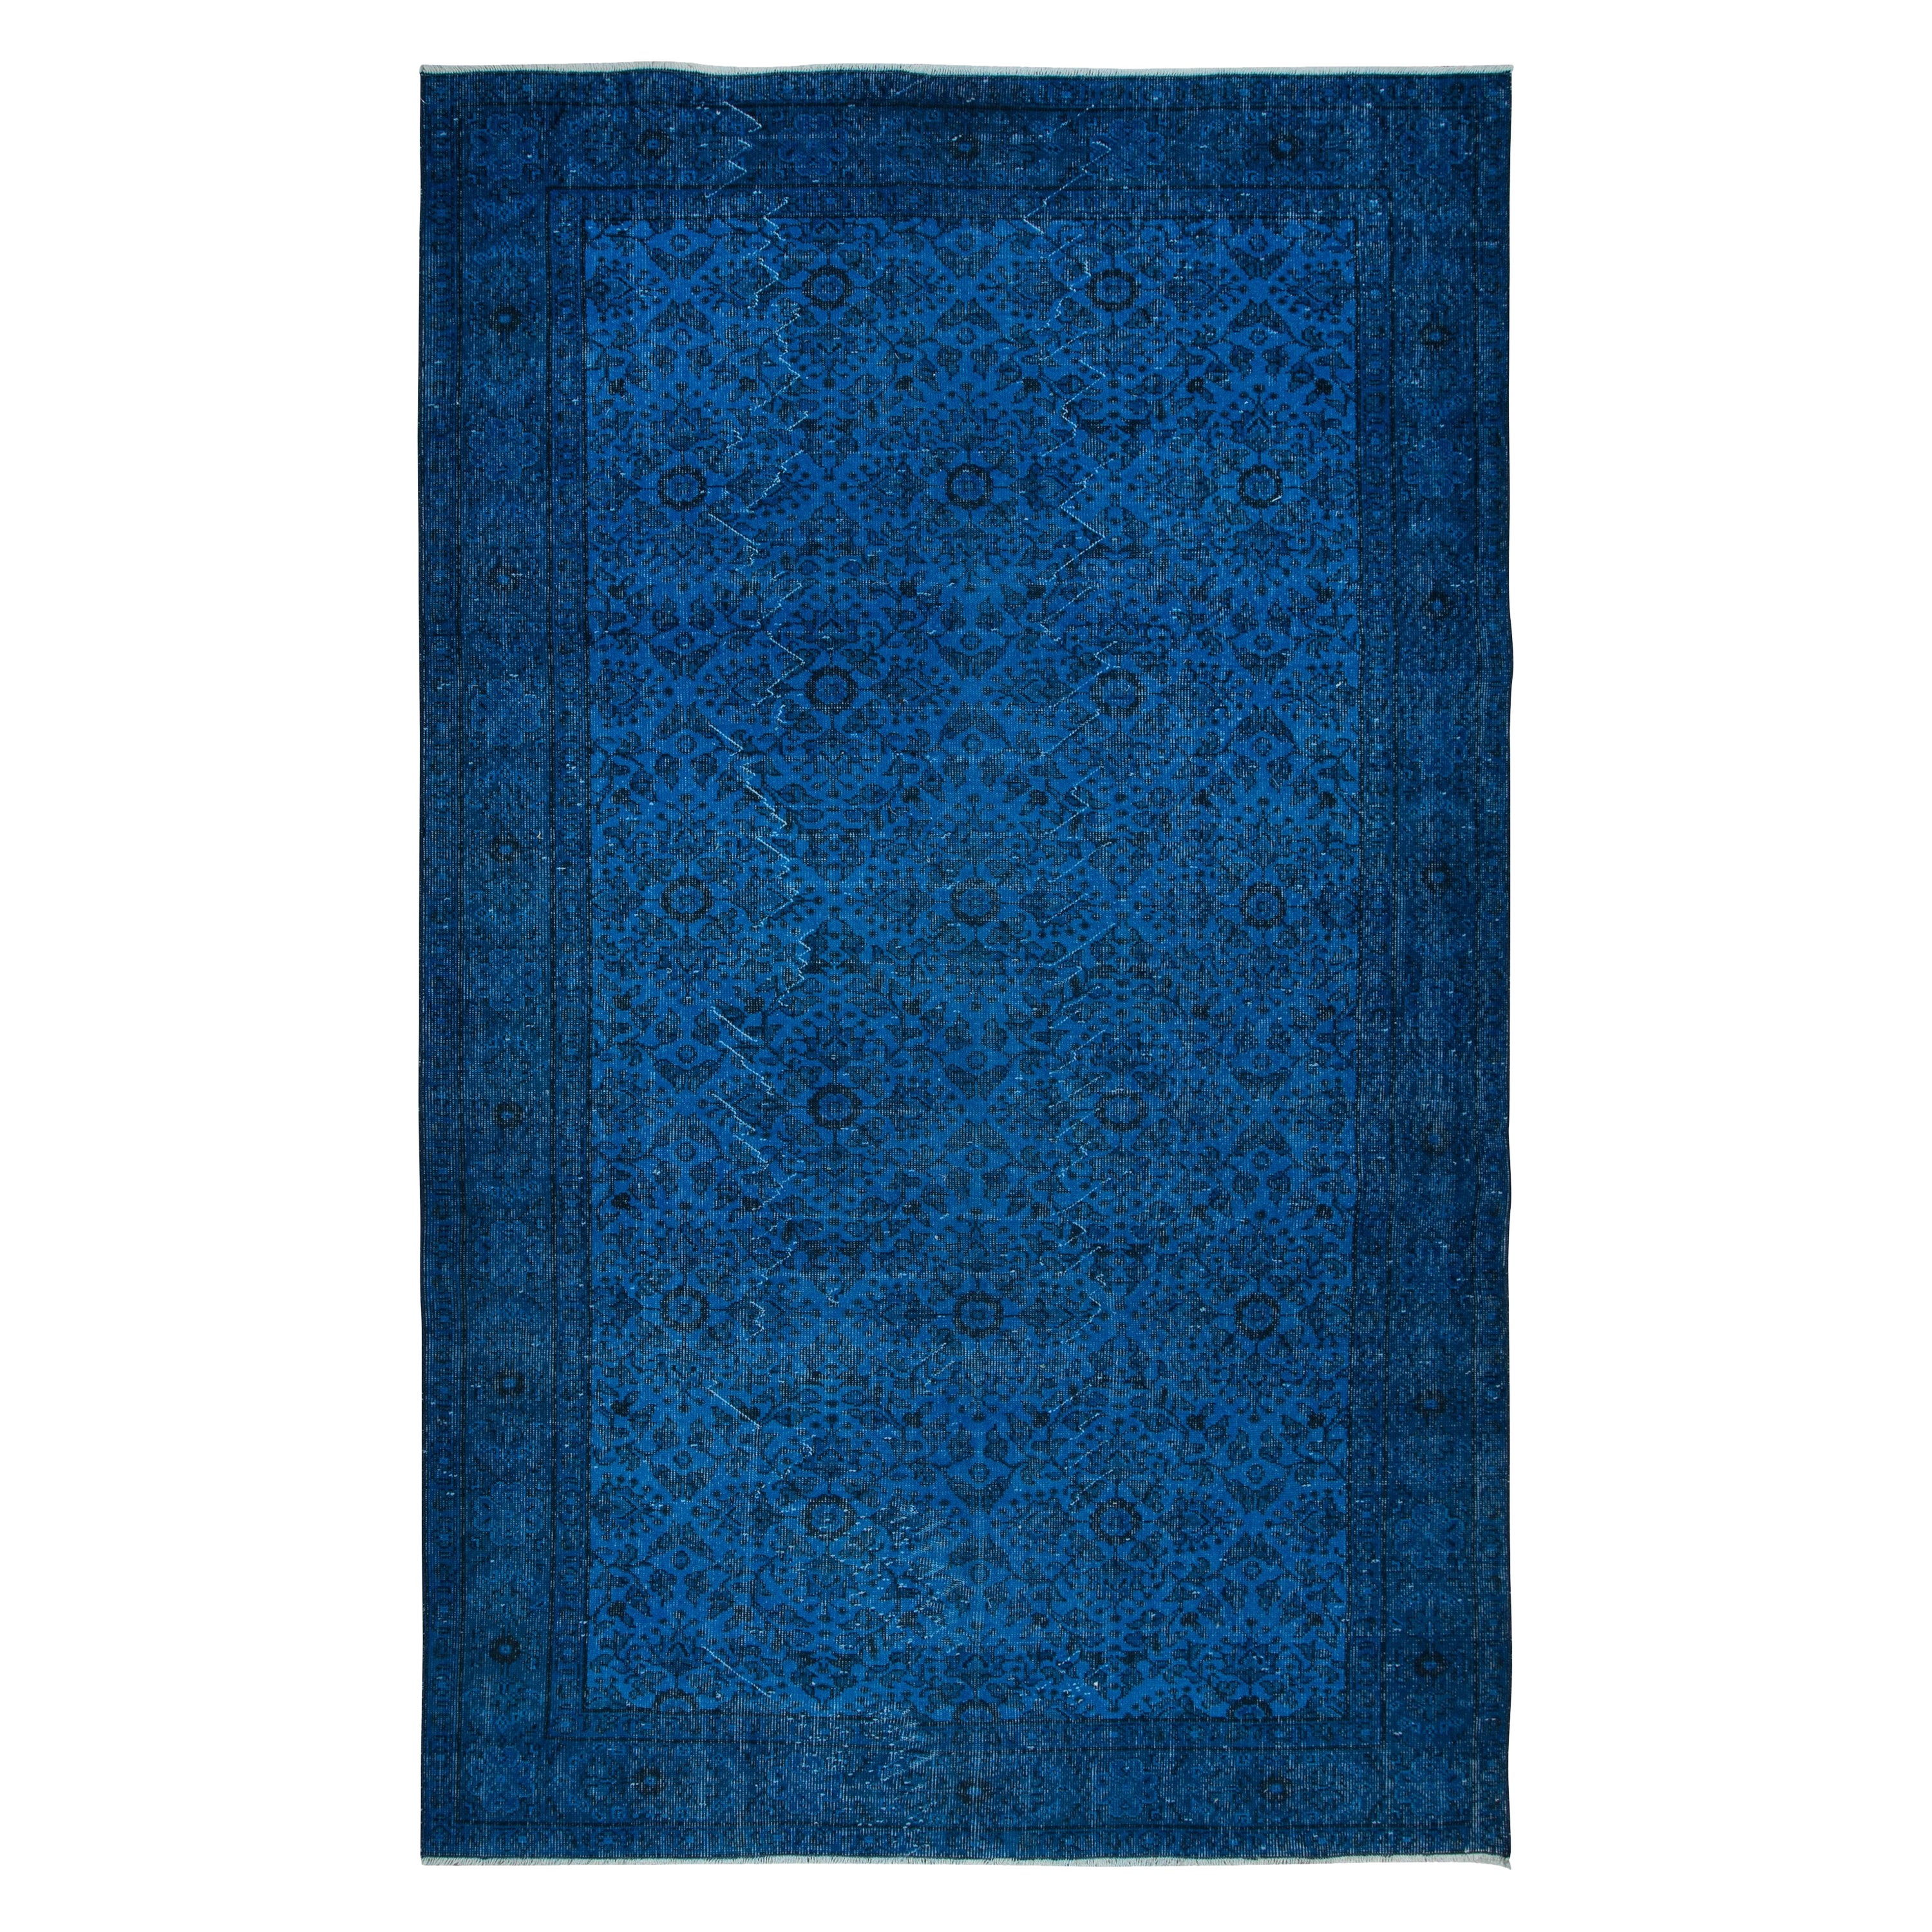 6.5x10.5 Ft Modern Turkish Floral Rug in Ocean Blue, Handmade Navy Blue Carpet For Sale